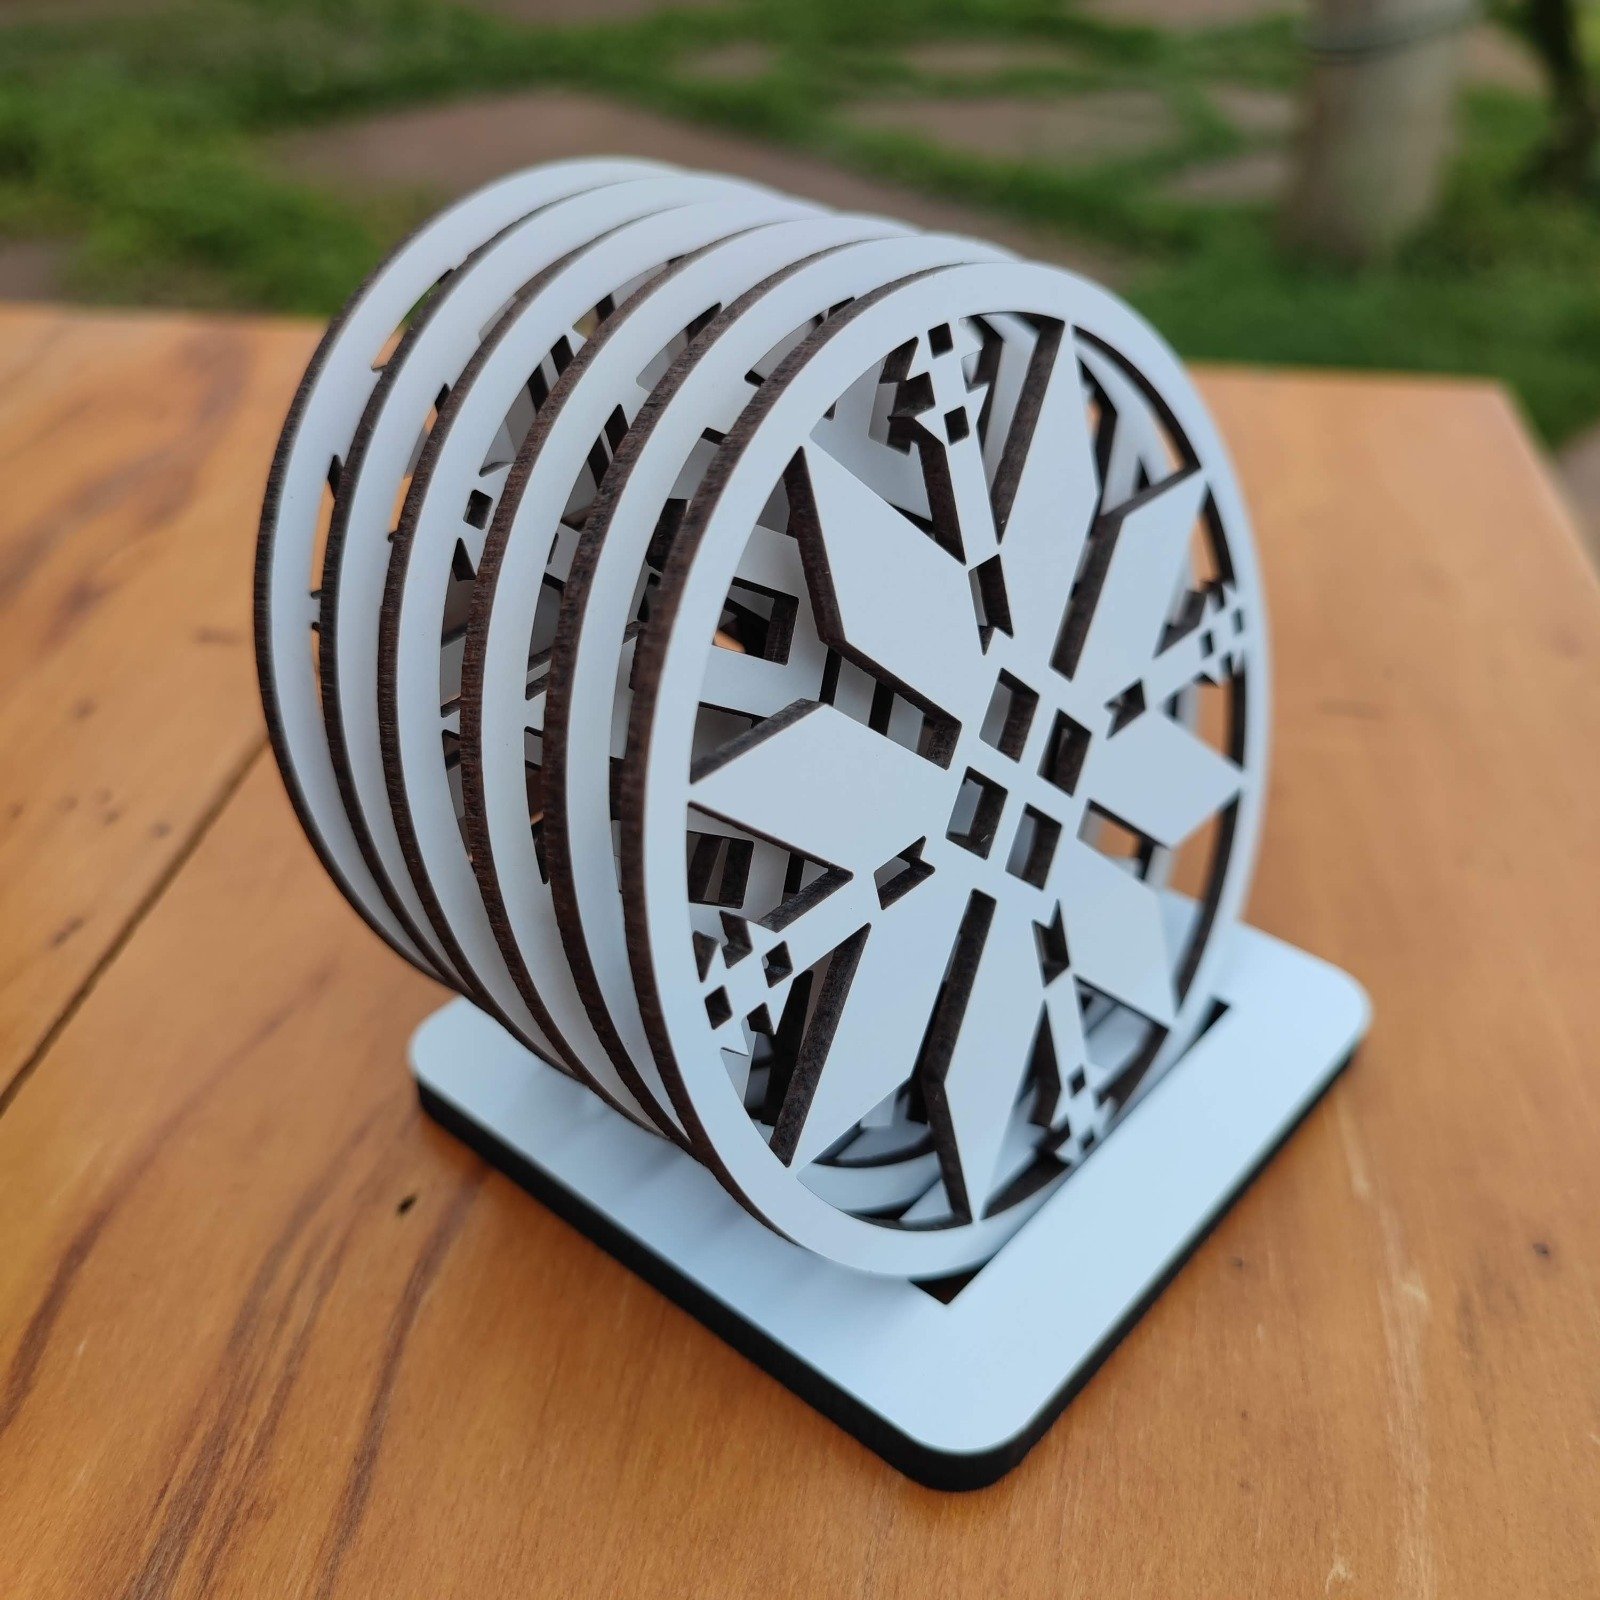 Kit 6 Porta Copos Conceito - Descanso de Copo com Corte a Laser Design Exclusivo